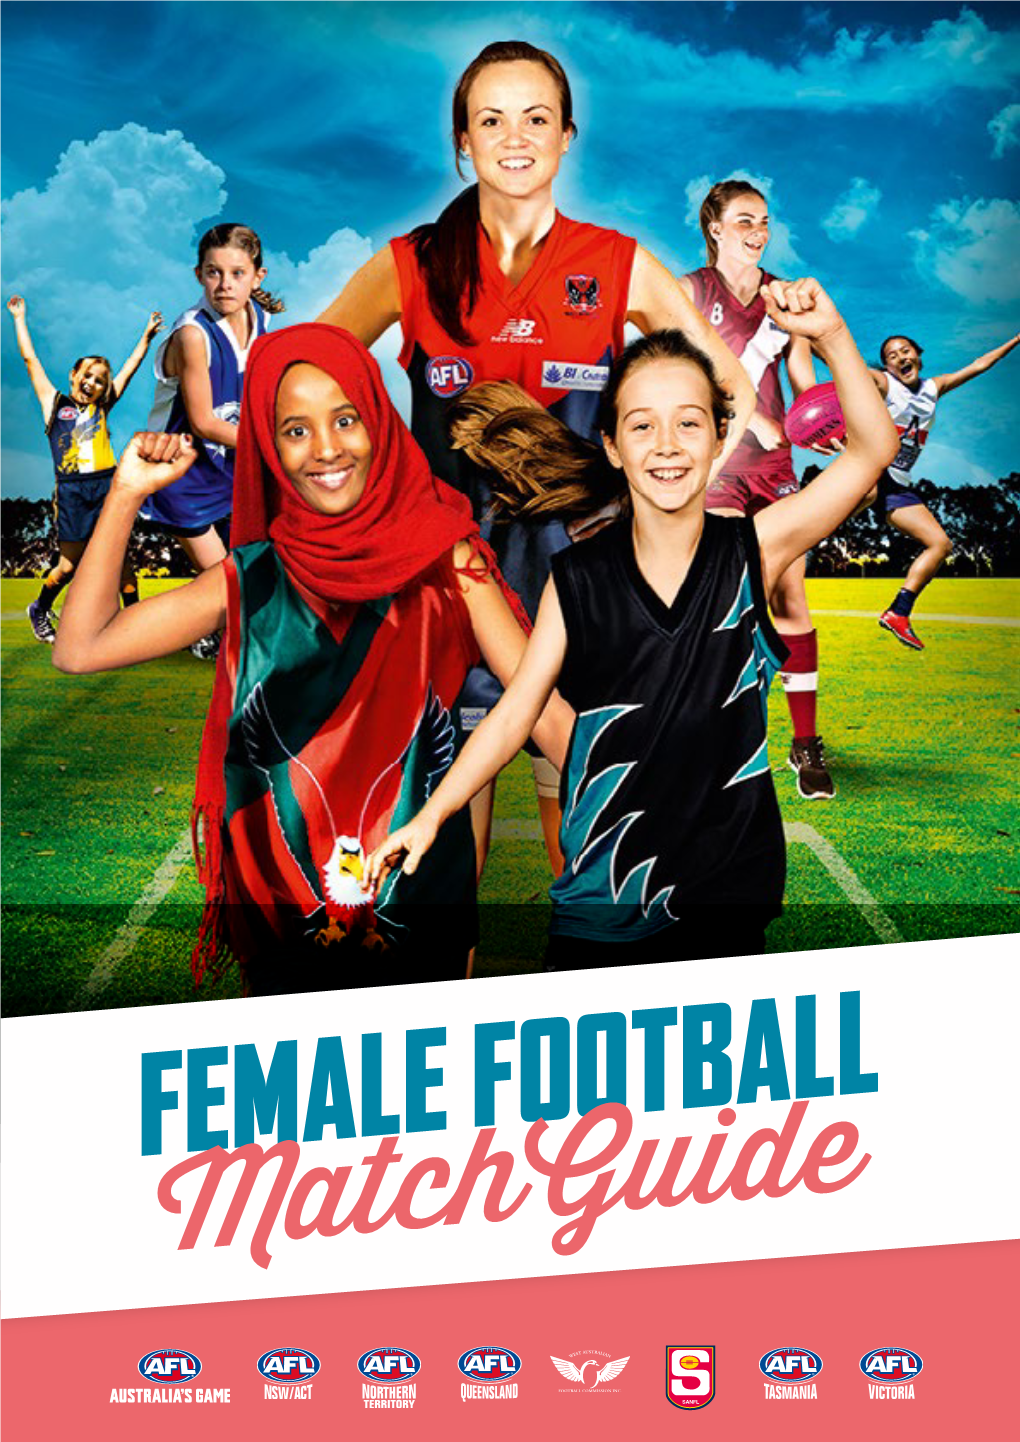 FEMALE FOOTBALL Matchguide